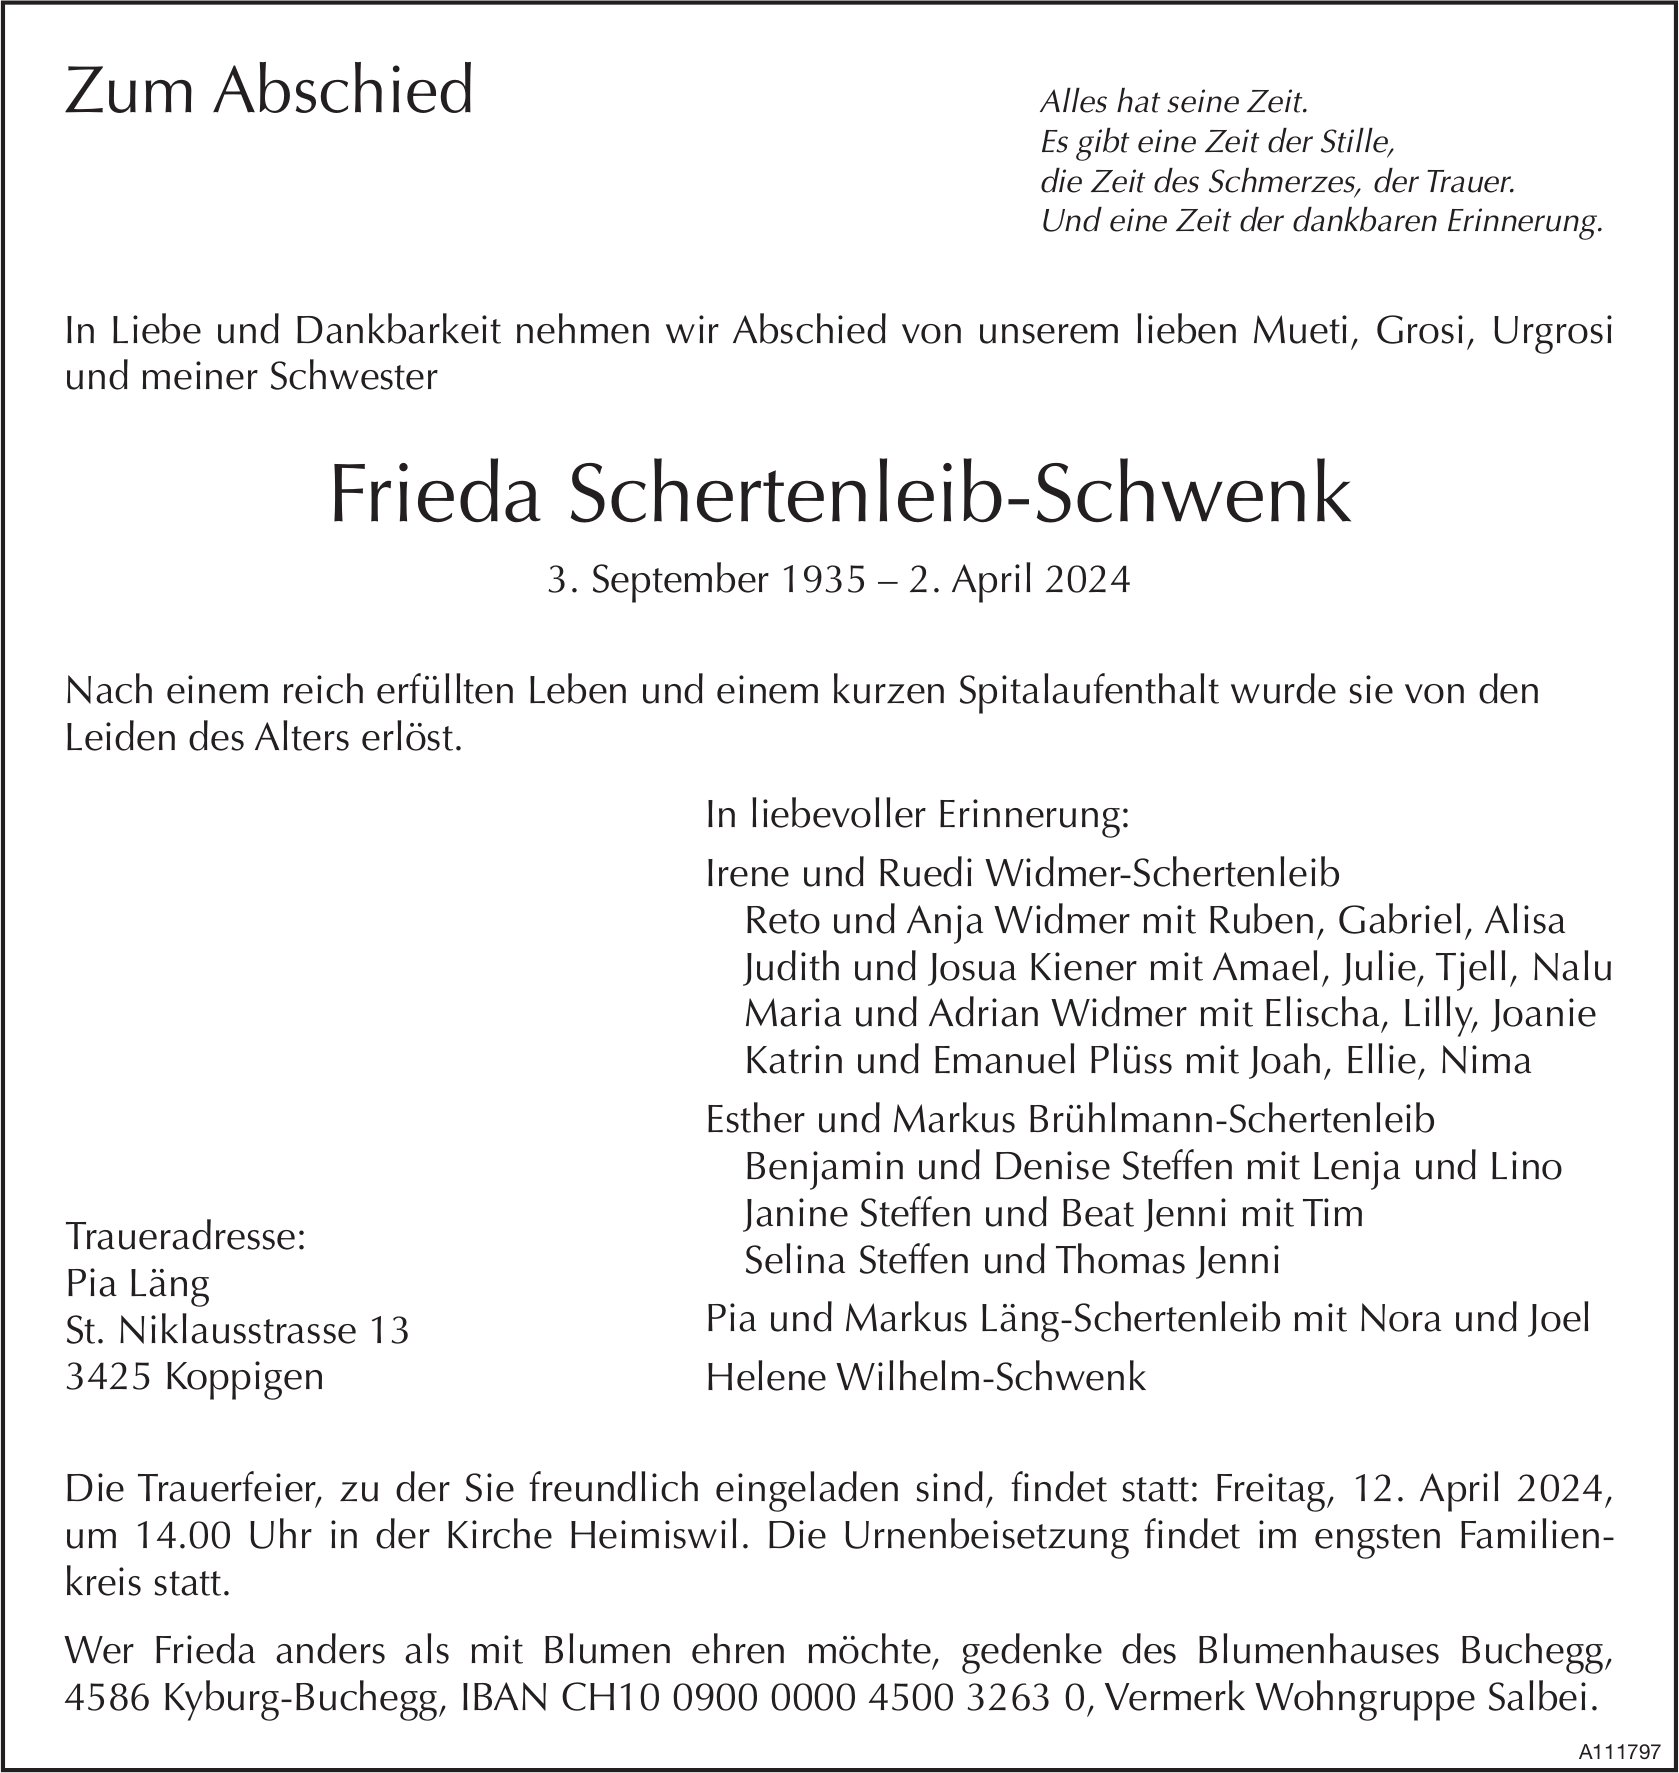 Frieda Schertenleib-Schwenk, April 2024 / TA